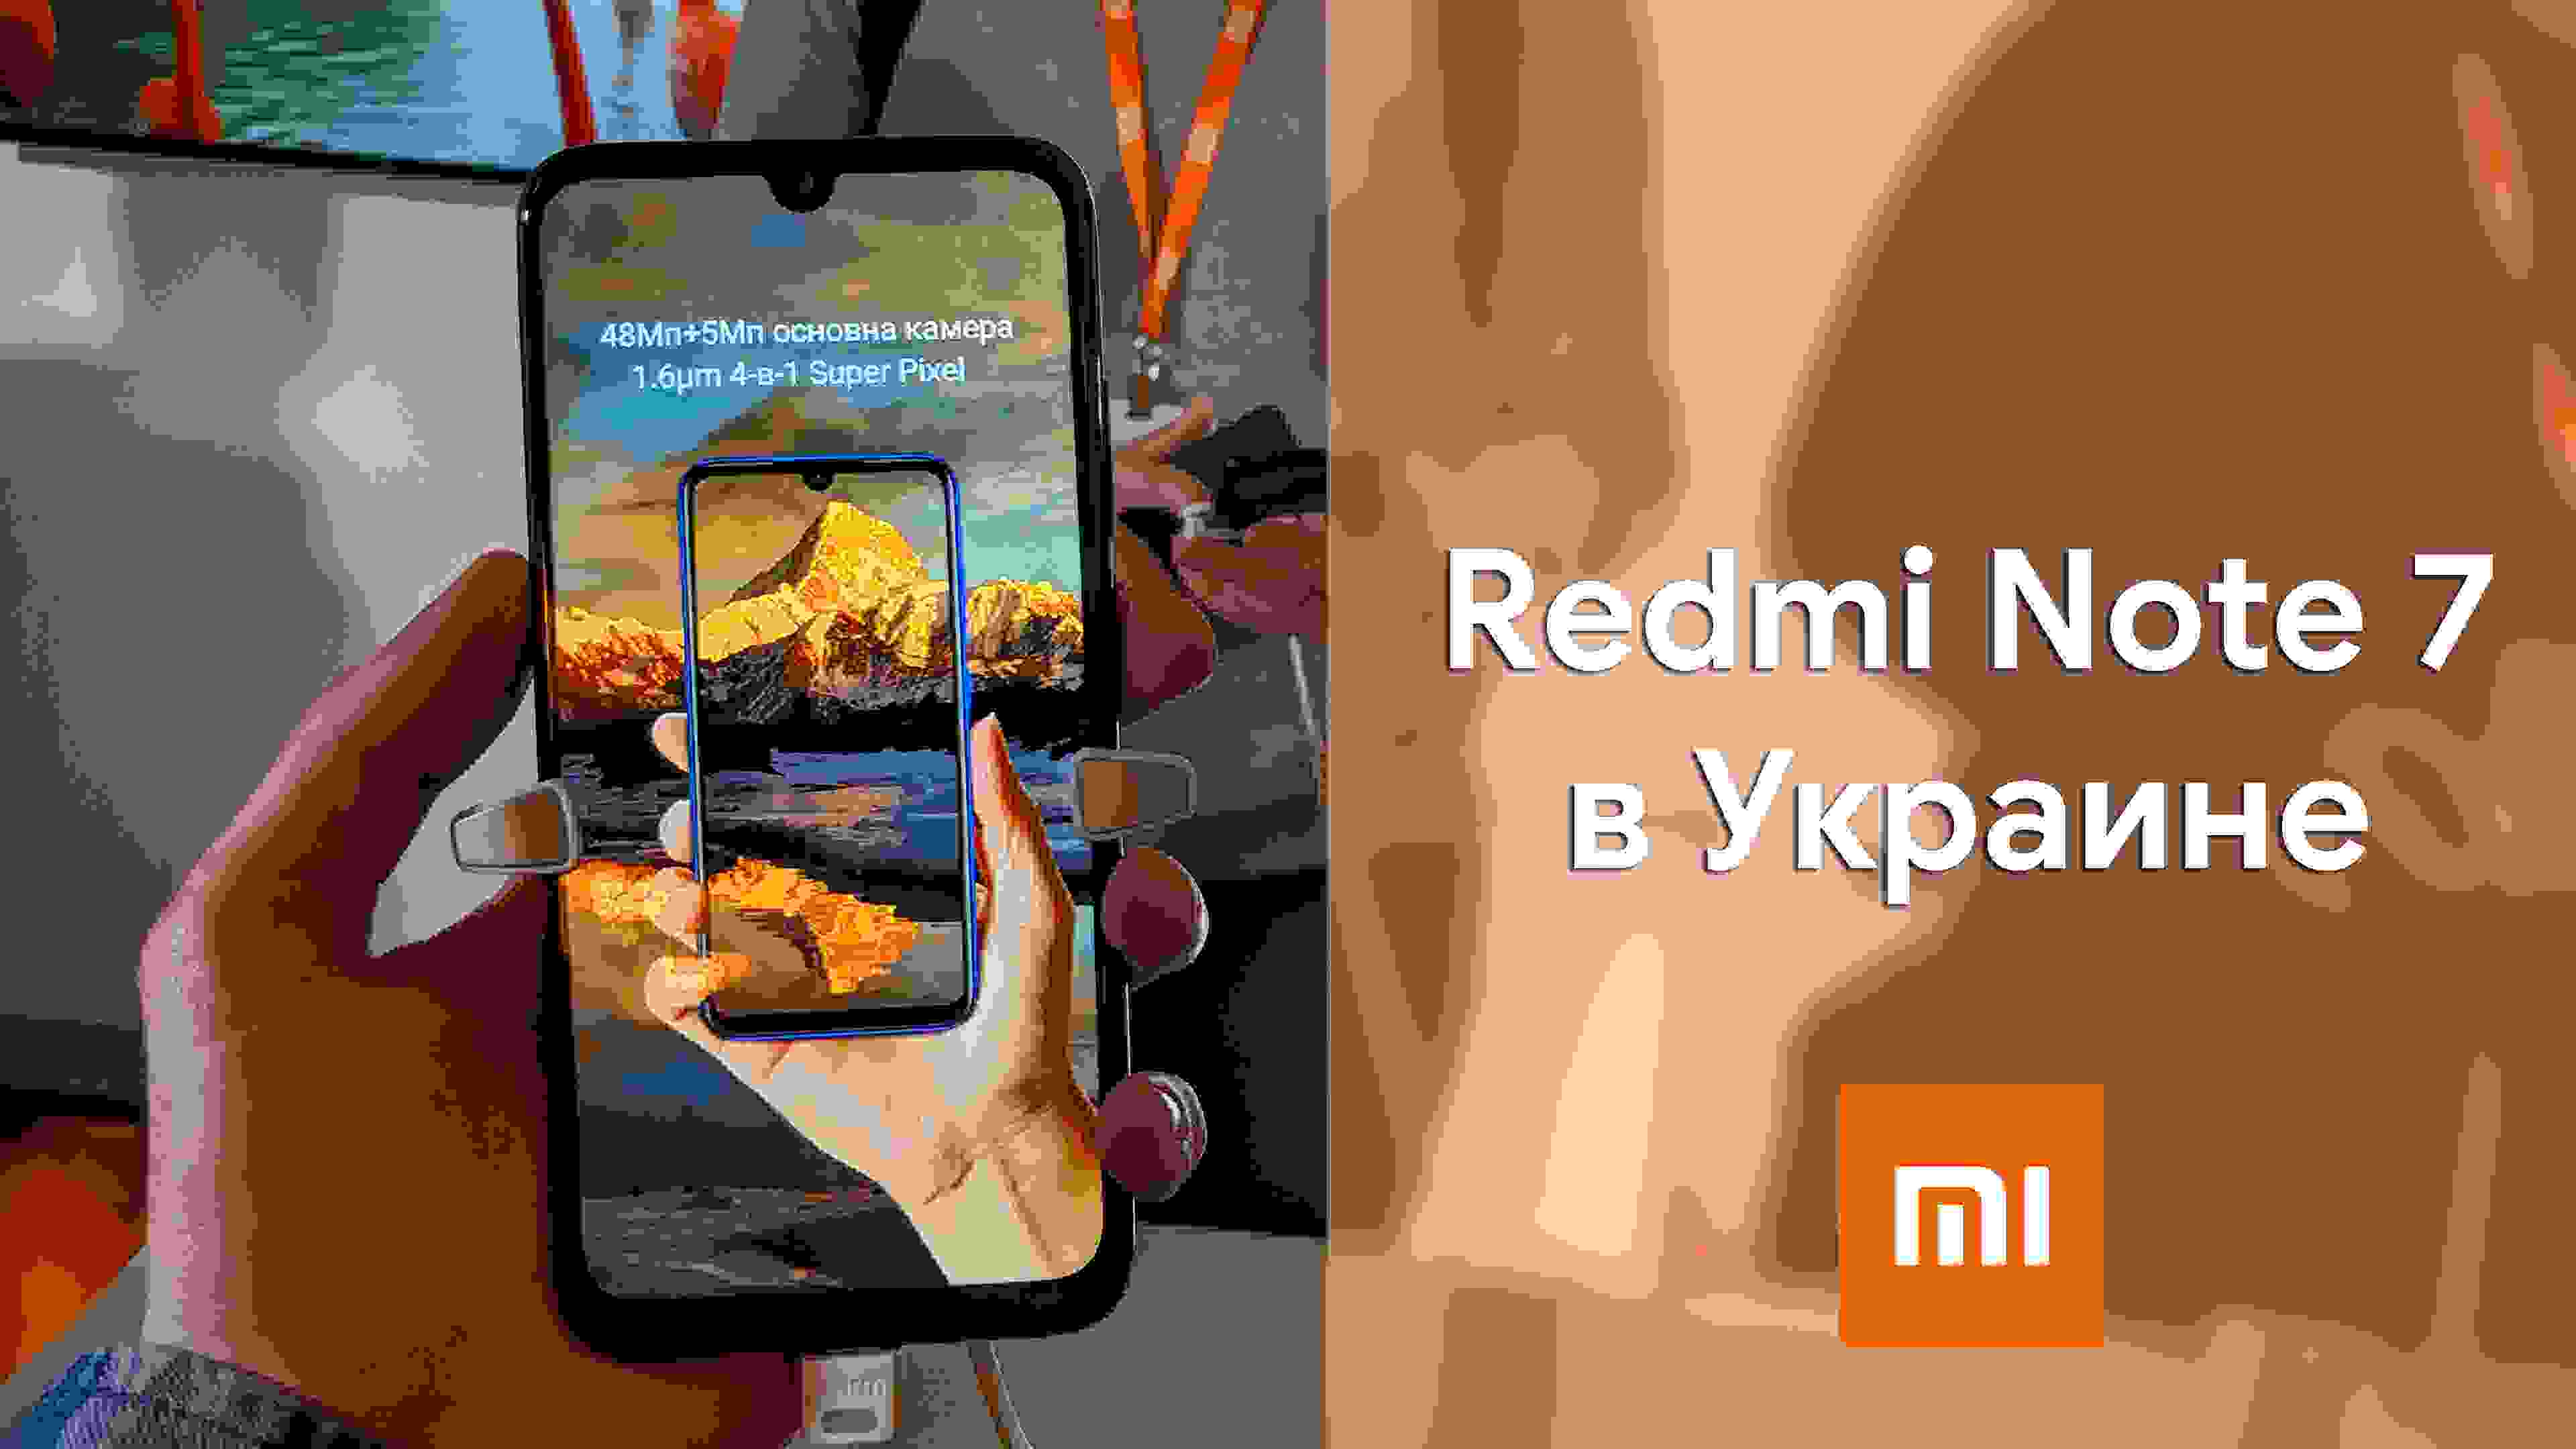 Redmi Note 7 официально представлен в Украине